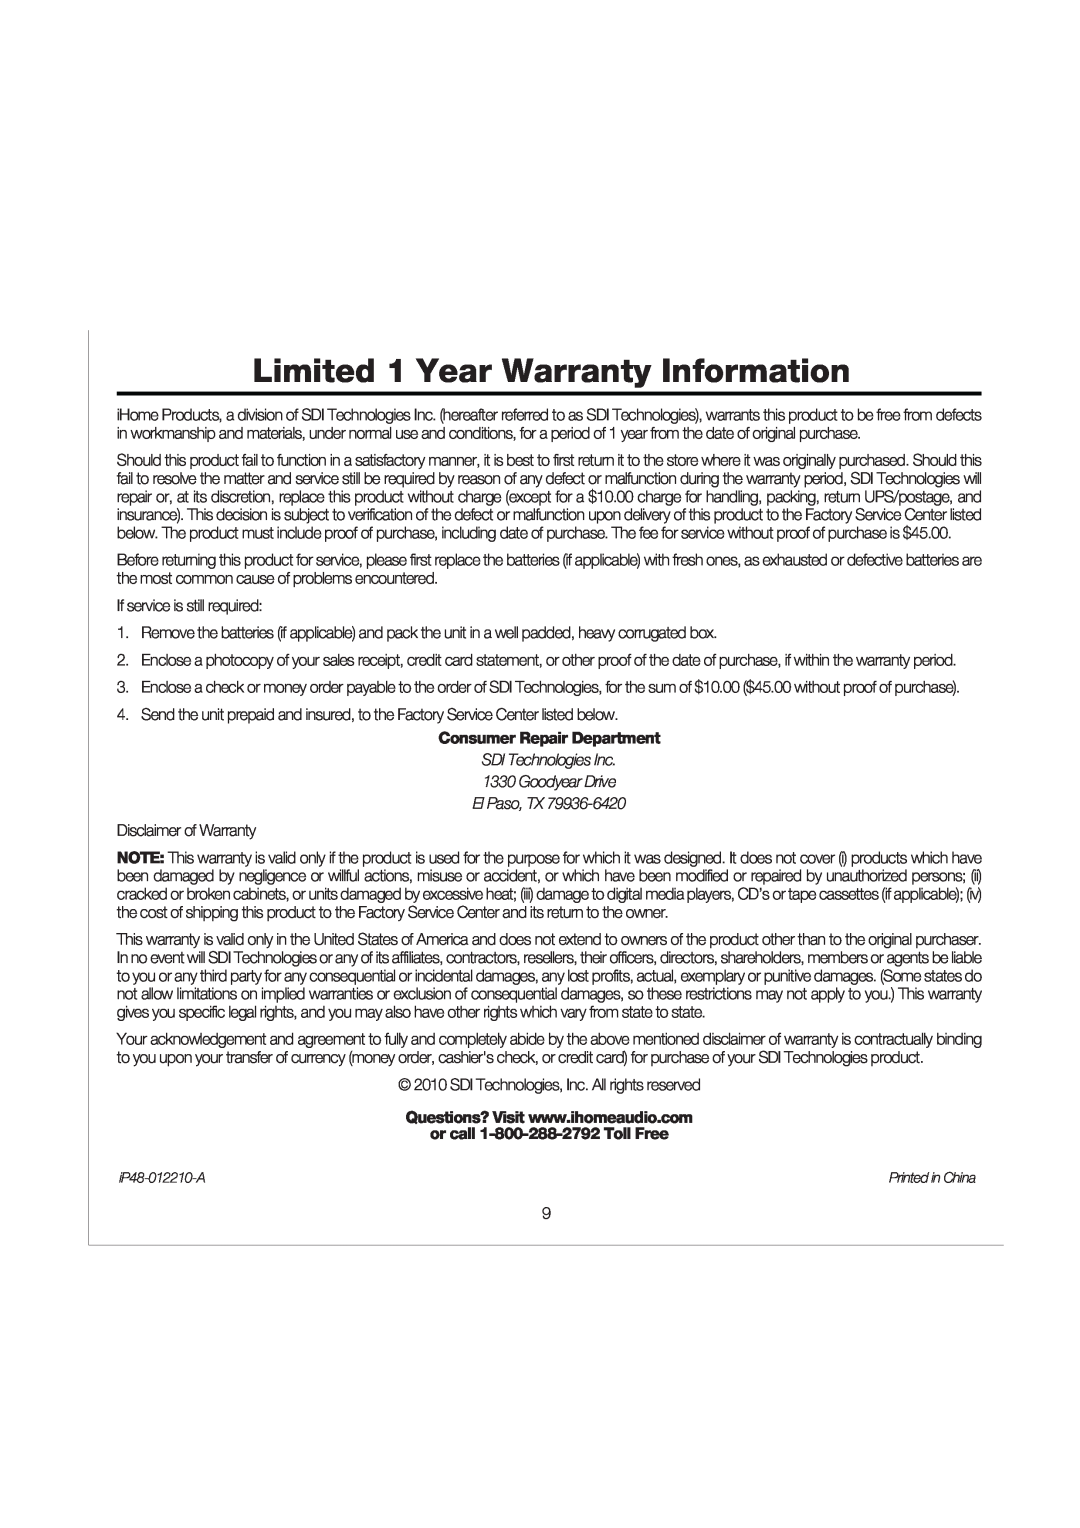 iHome IP48 manual Limited 1 Year Warranty Information, Consumer Repair Department, SDI Technologies Inc 1330 Goodyear Drive 